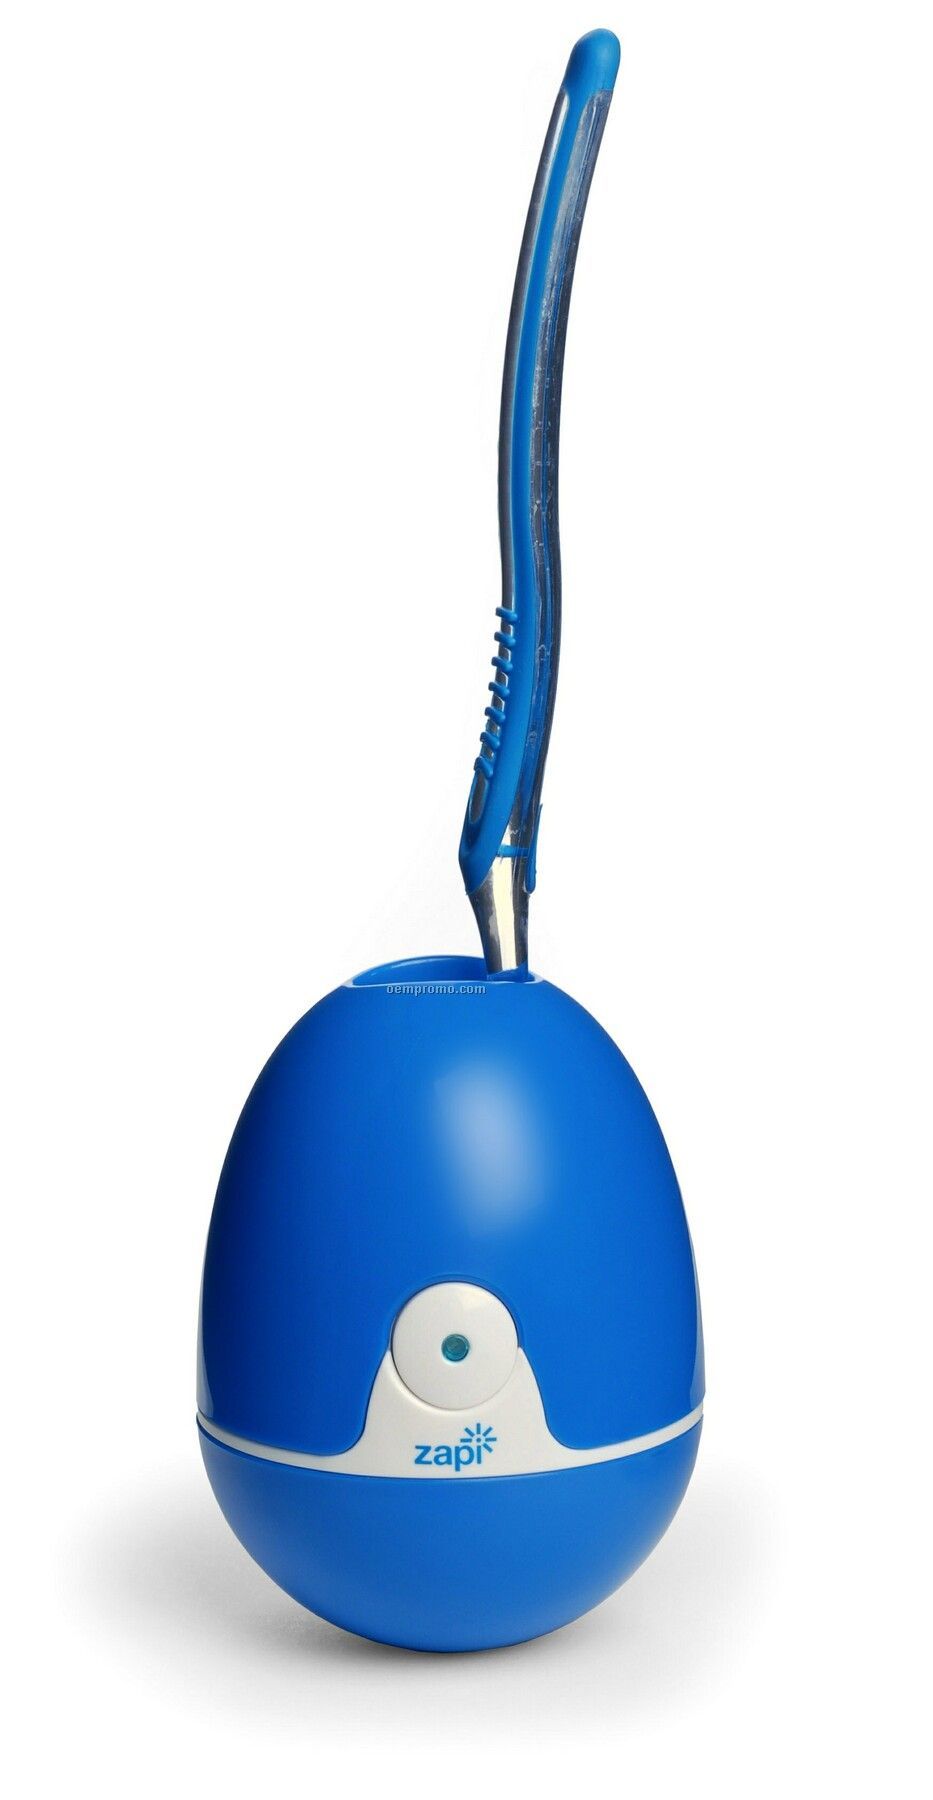 Violight Zapi The Fun UV Toothbrush Sanitizer (Blue)